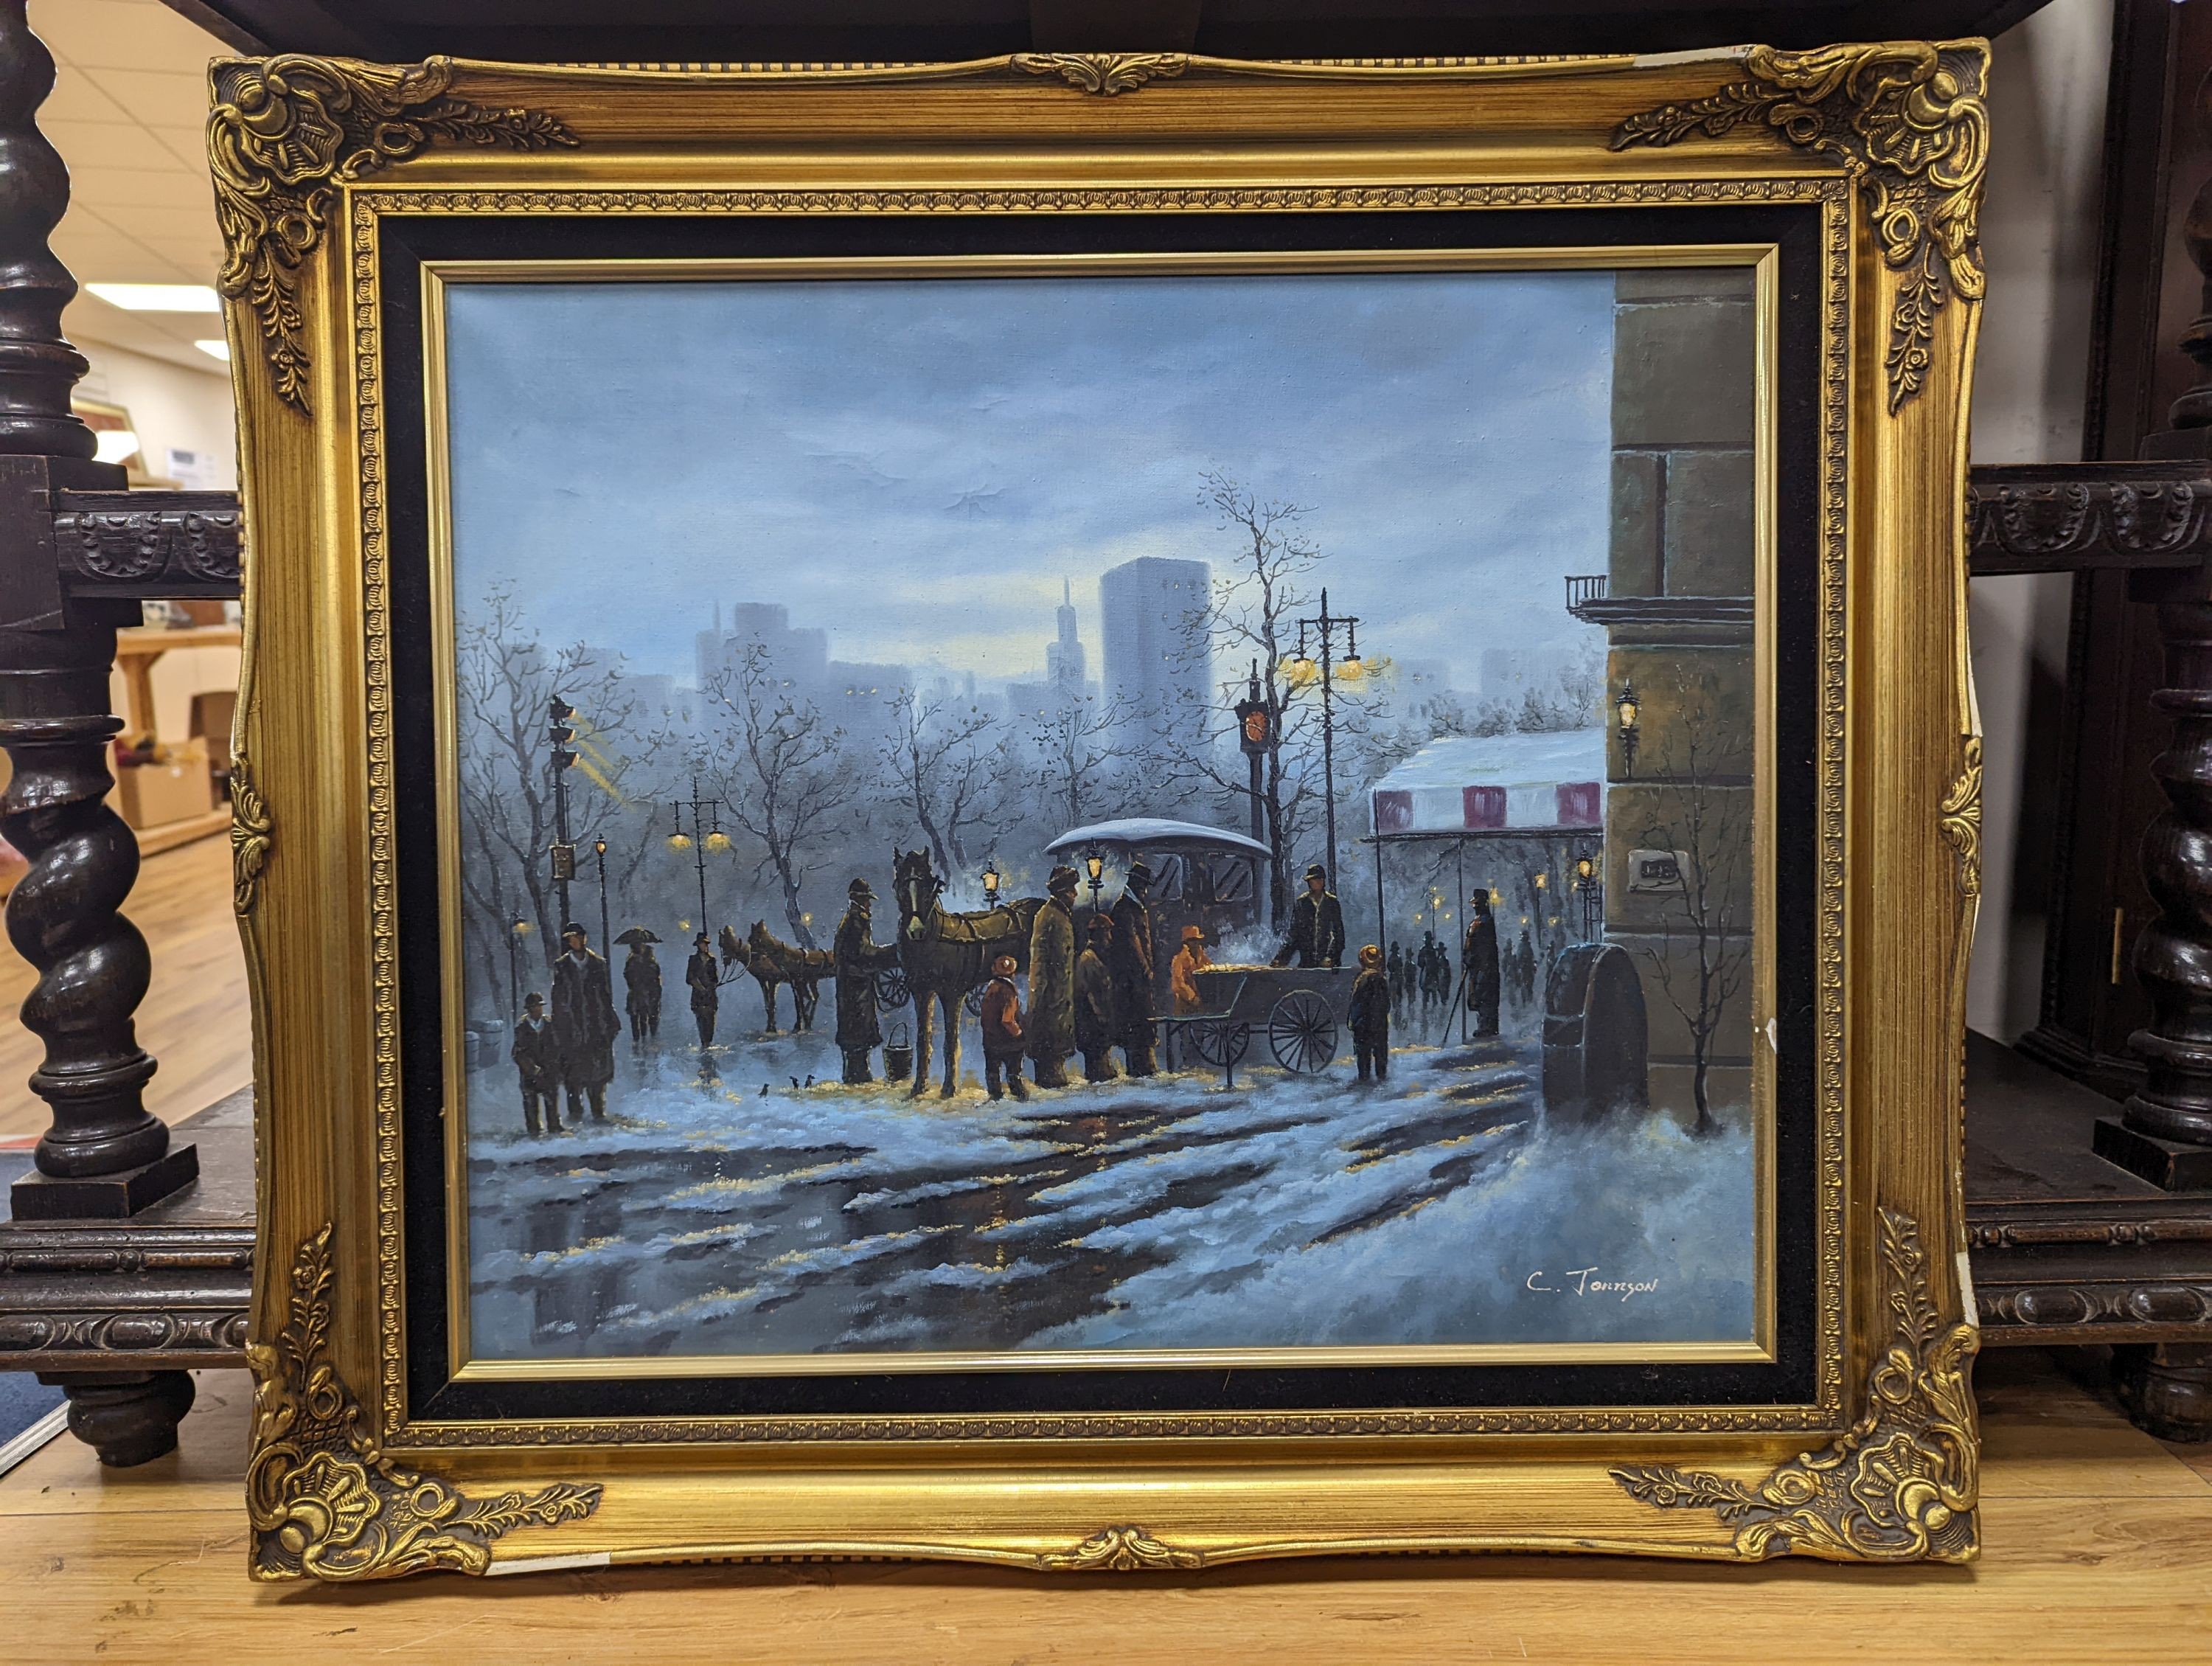 C. Jonnson - modern oil on canvas, Winter town scene, 49.5 x 59.5cm - Image 2 of 4